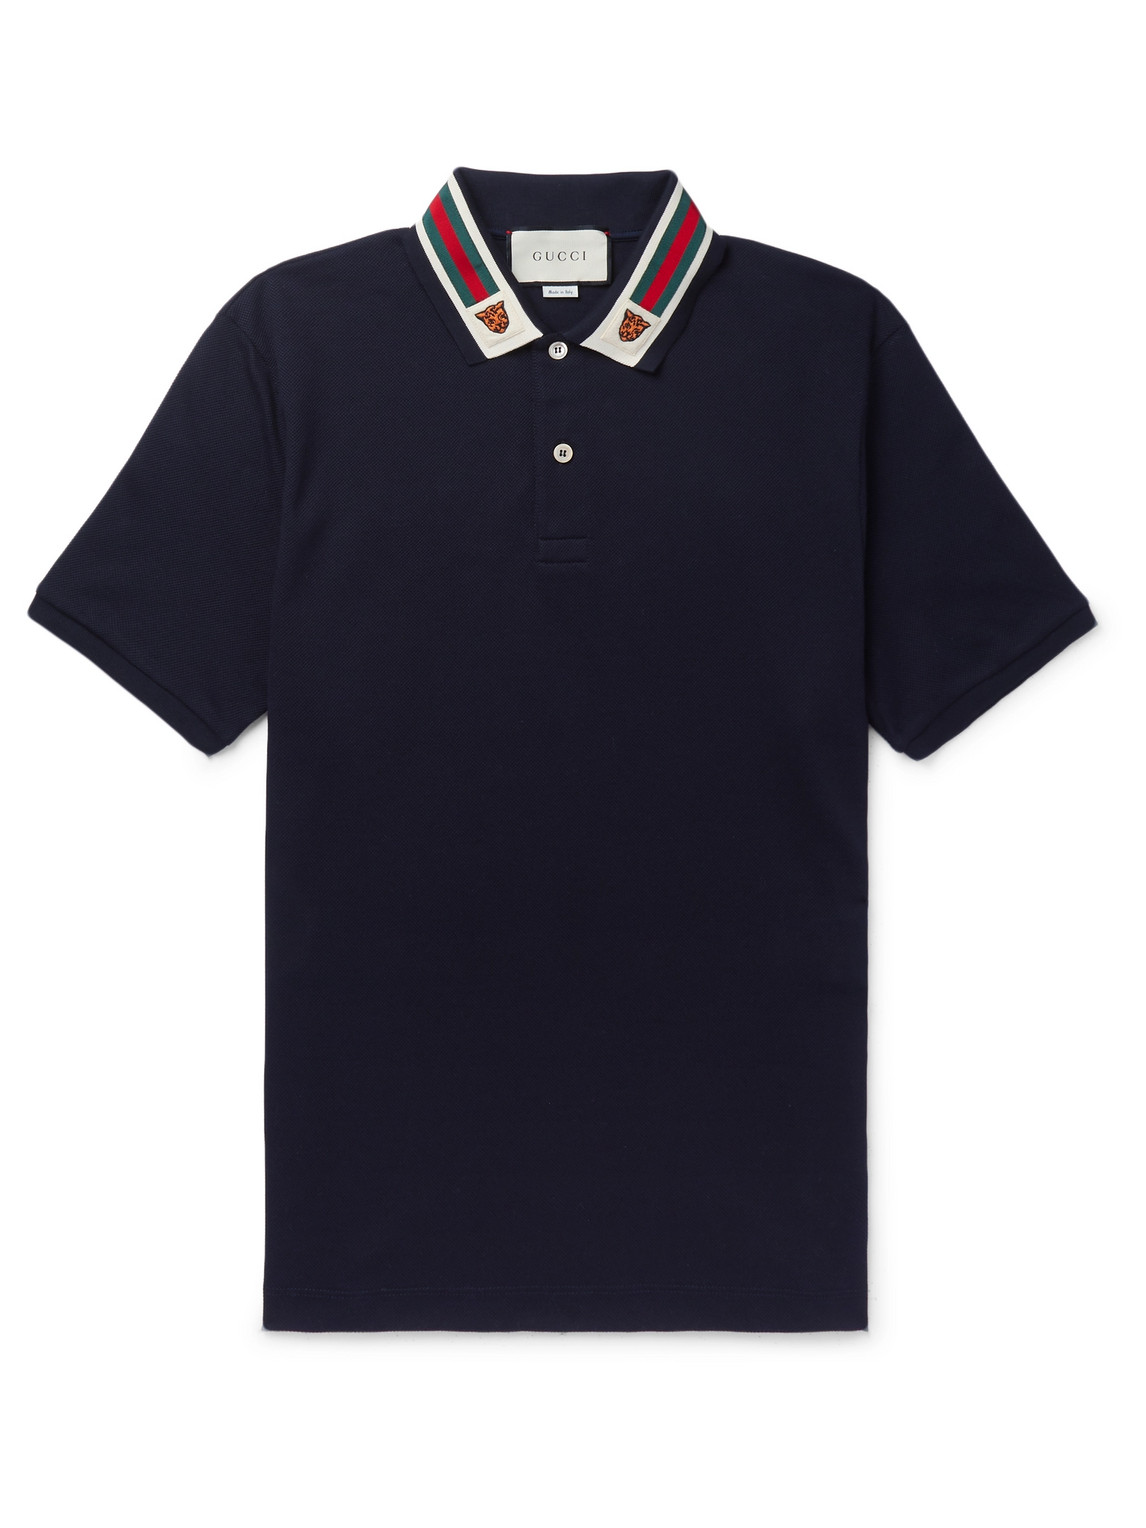 Appliquéd Webbing-Trimmed Cotton-Piqué Polo Shirt